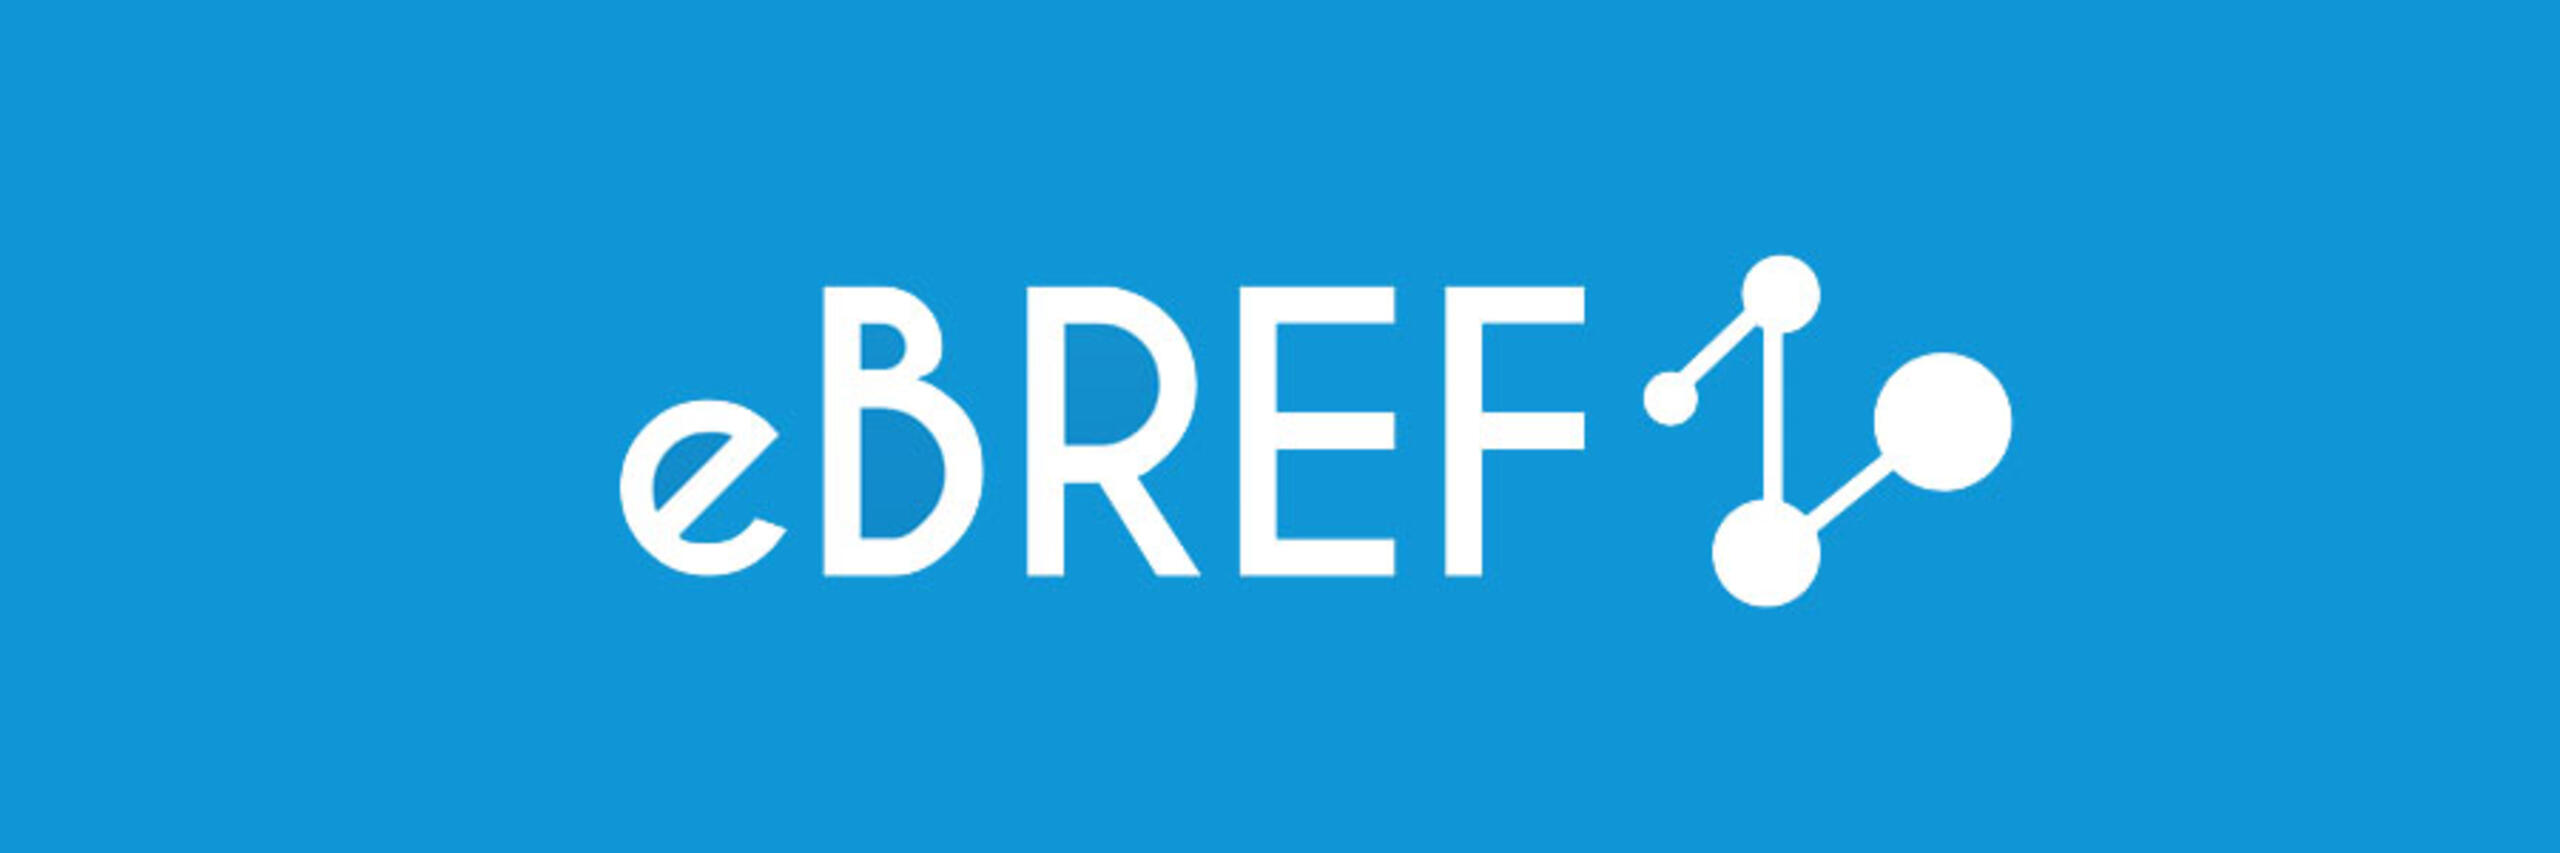 logo application EBREF